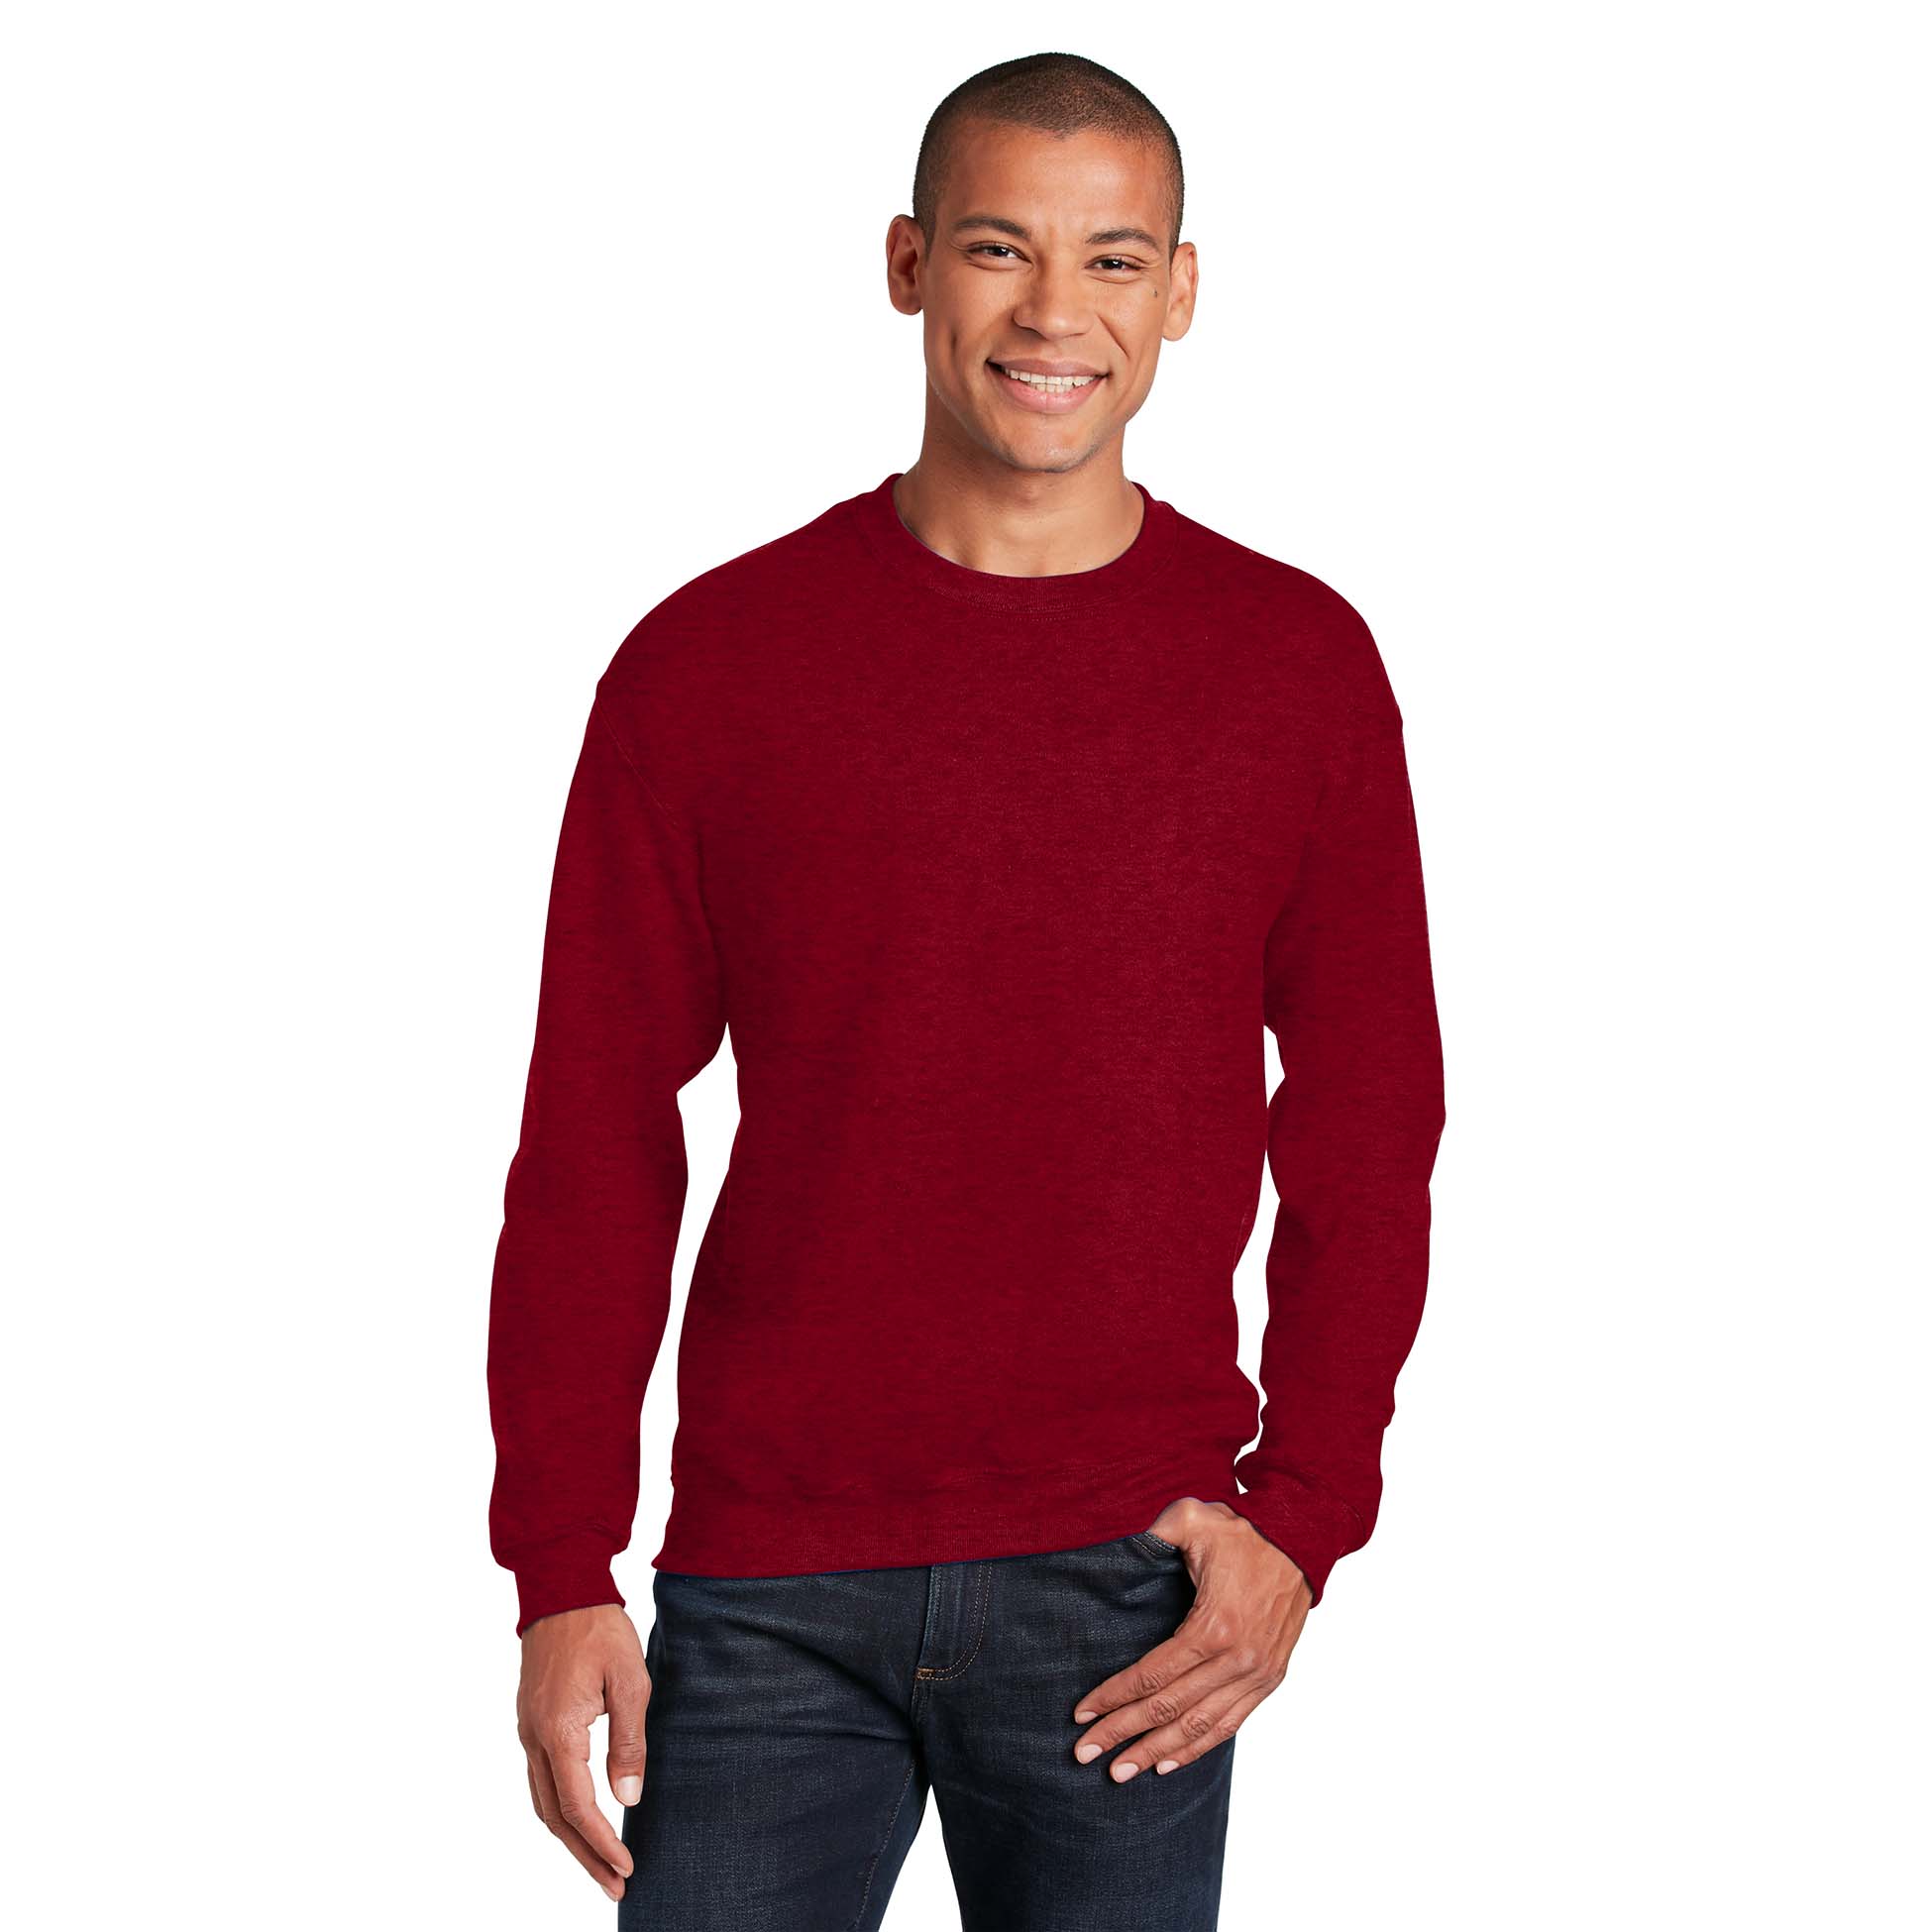 Love Adult Crewneck Sweatshirt 1801 - Red